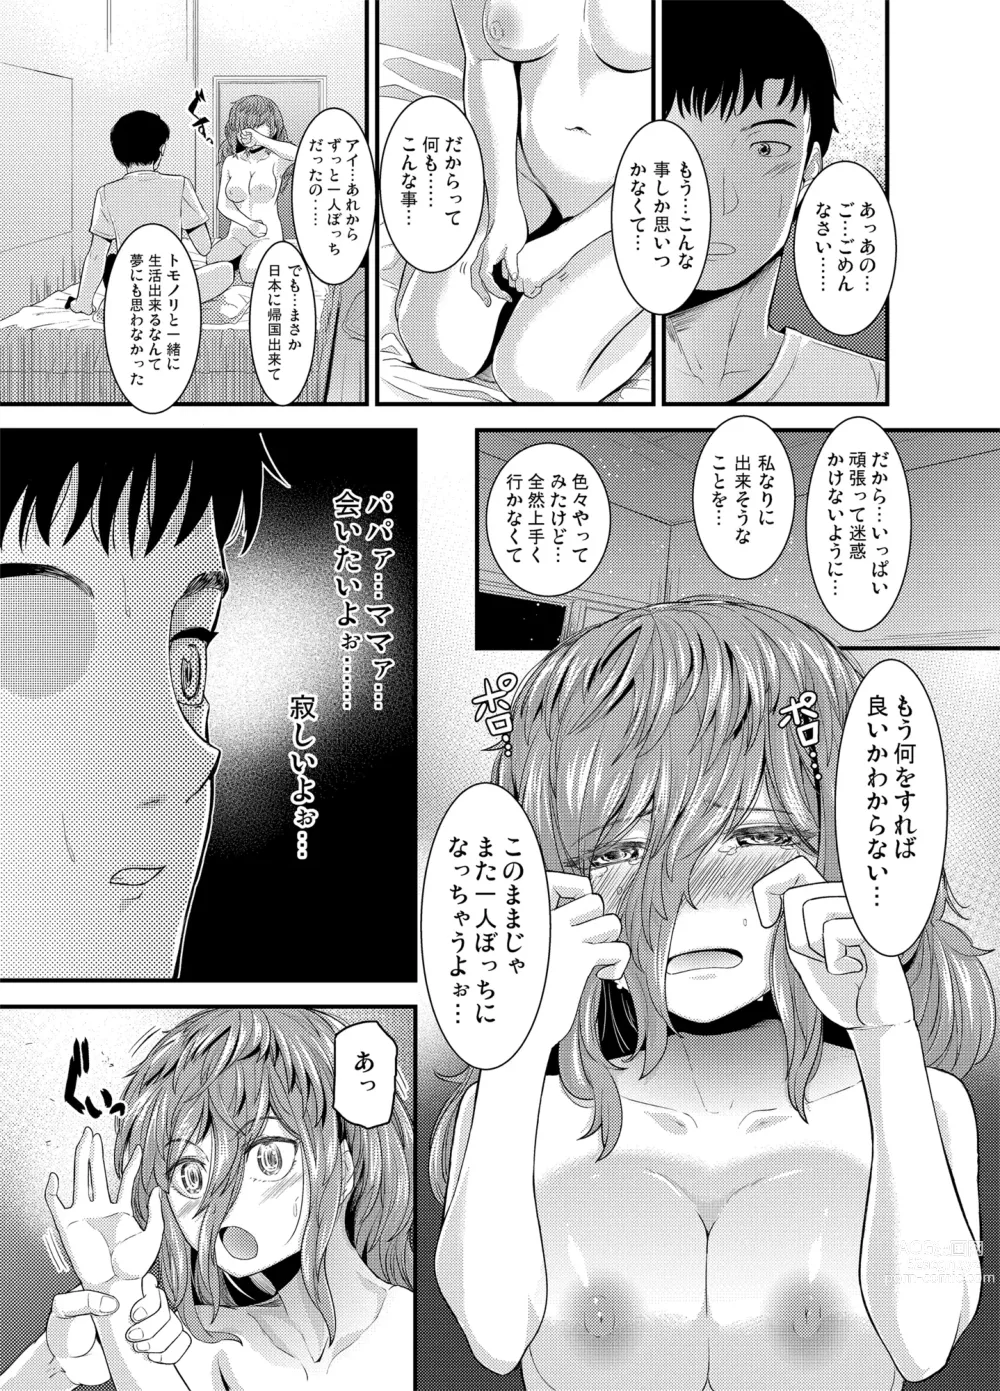 Page 8 of doujinshi Itsumo Arigatou - Thank you always